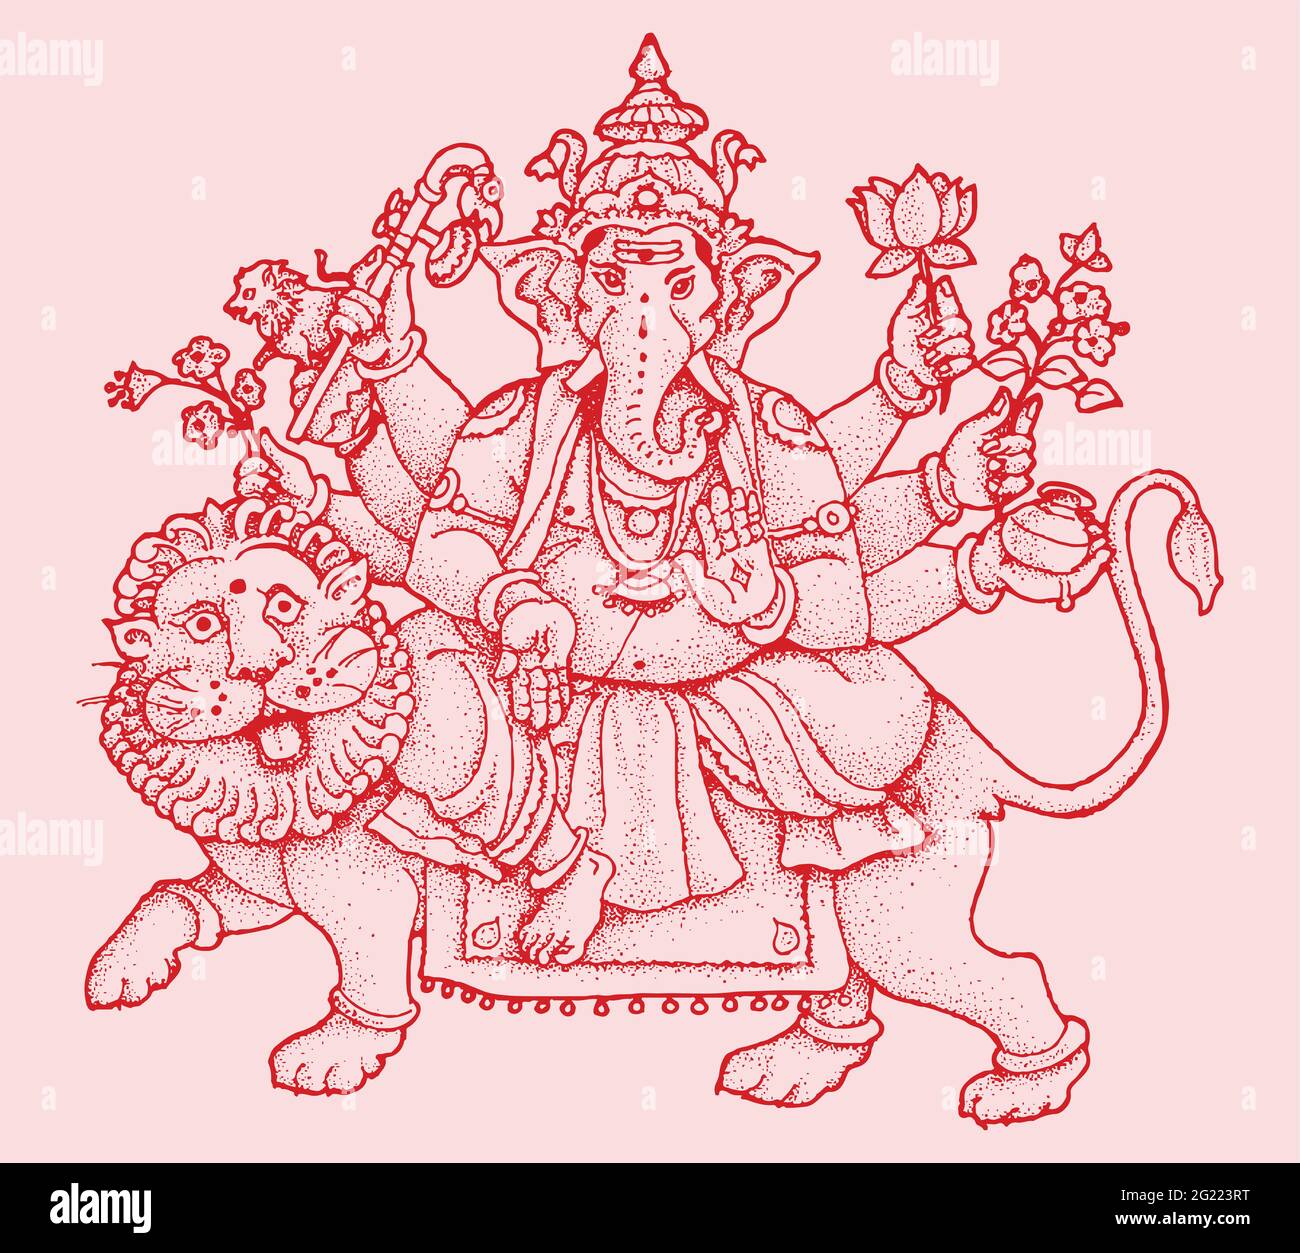 Shree ganesh drawing | Ganesh art, Fan art drawing, God illustrations-saigonsouth.com.vn